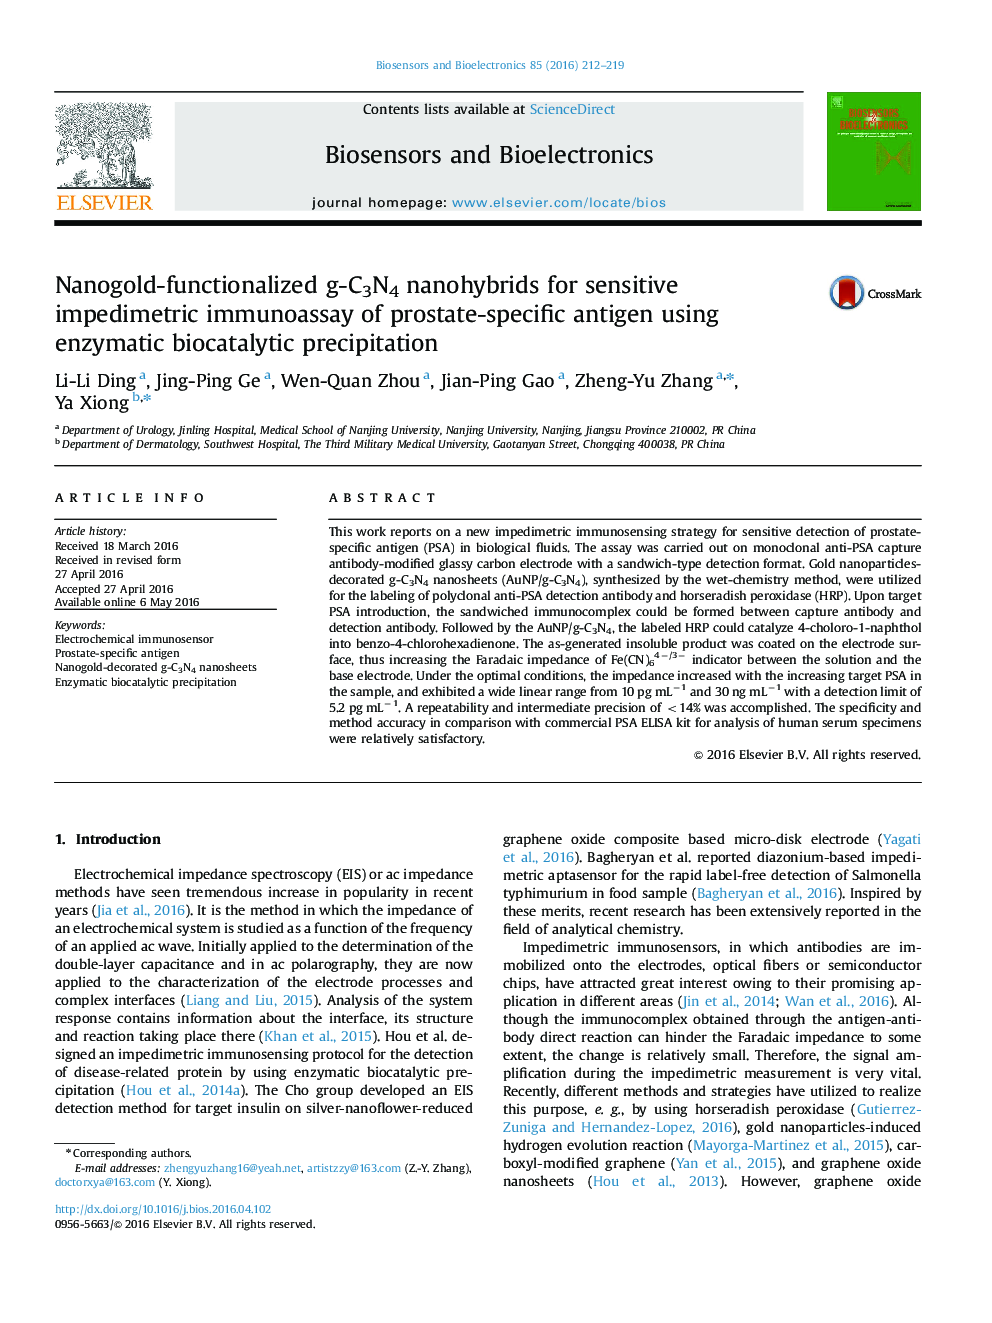 Nanogold-functionalized g-C3N4 nanohybrids for sensitive impedimetric immunoassay of prostate-specific antigen using enzymatic biocatalytic precipitation